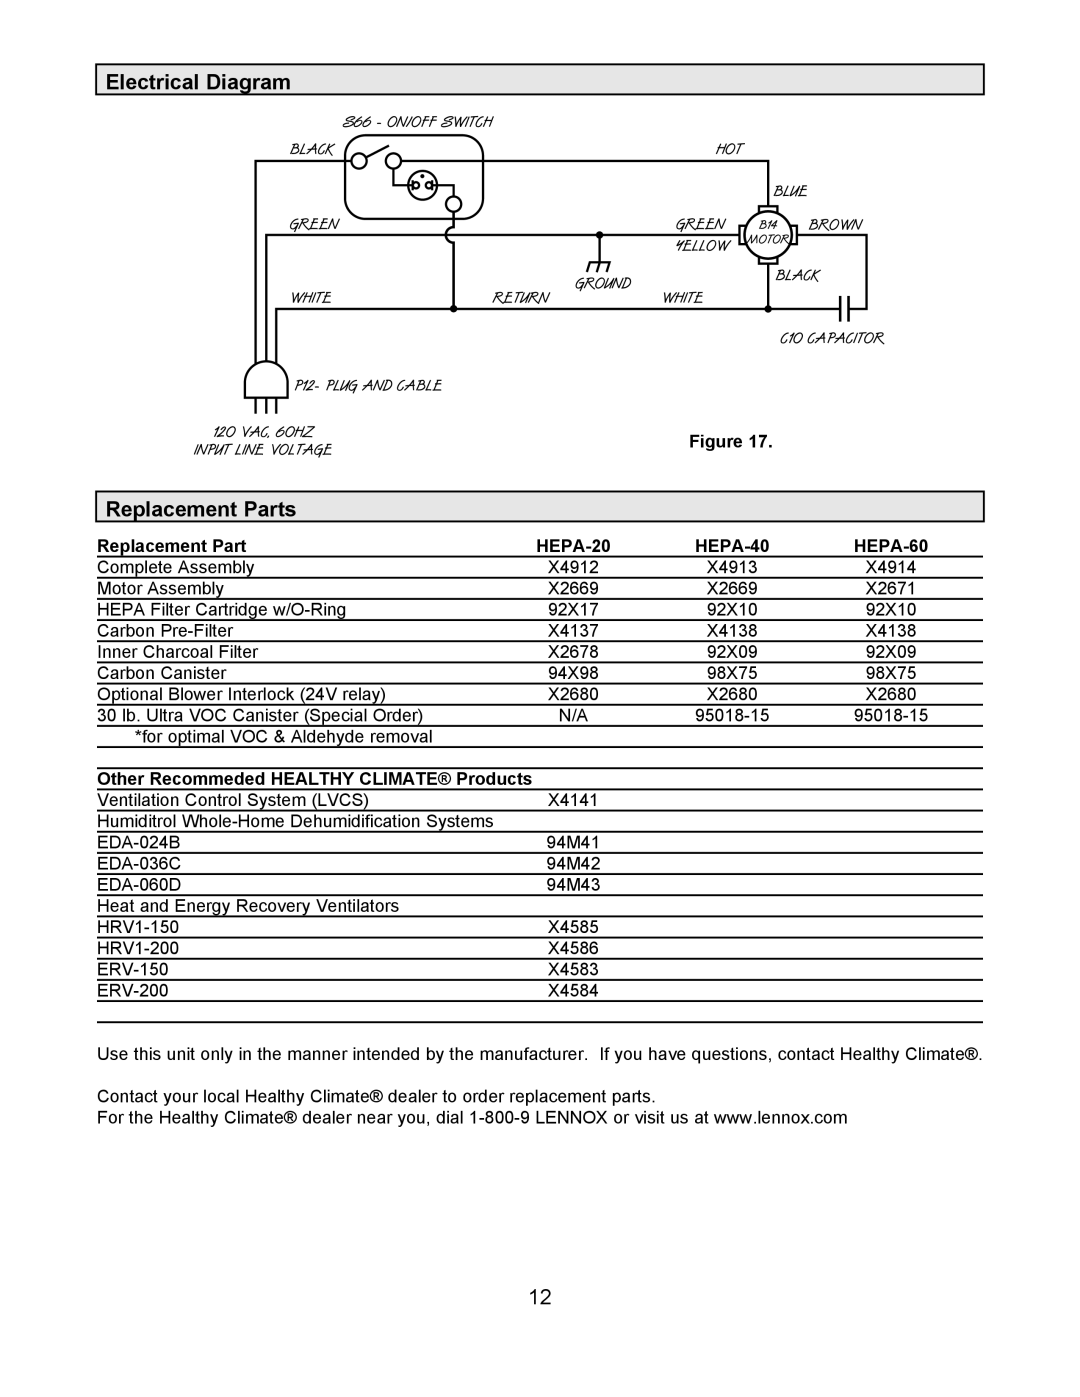 Lennox International Inc 887M, AIR CLEANERS/ FILTERS, 504 Electrical Diagram, Replacement Parts, HEPA-20, HEPA-40, HEPA-60 